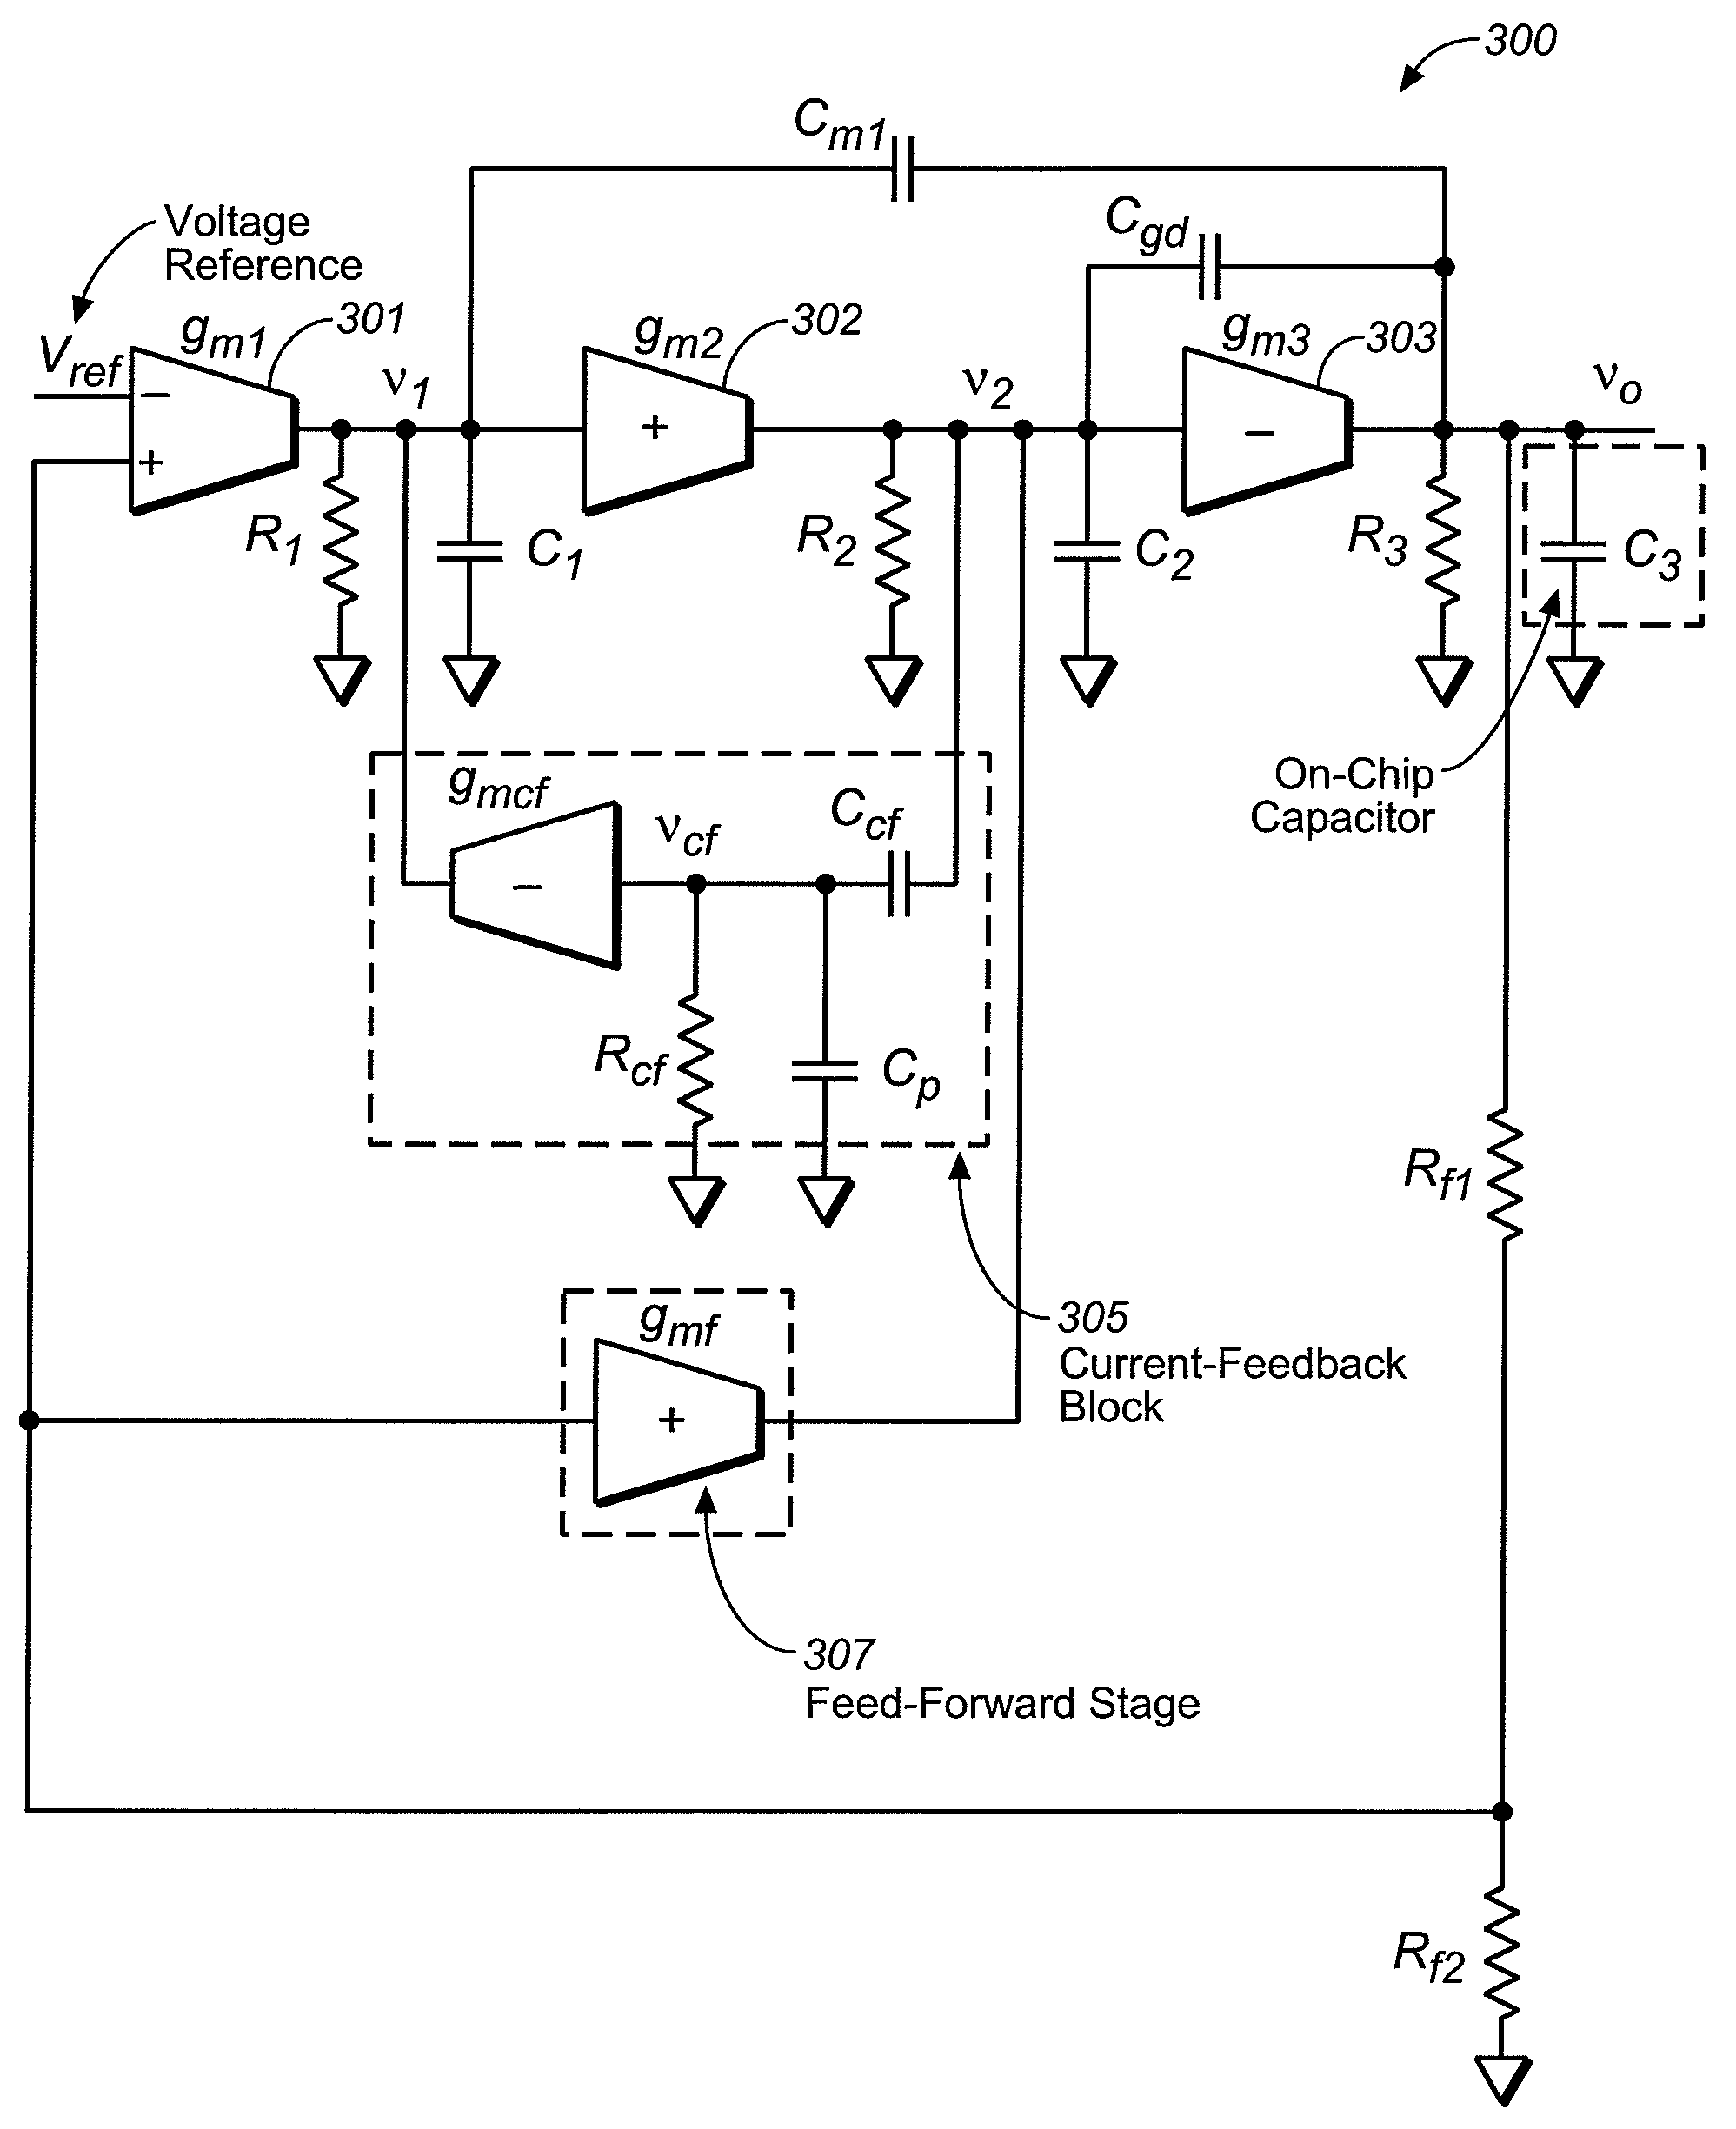 Area-efficient capacitor-free low-dropout regulator